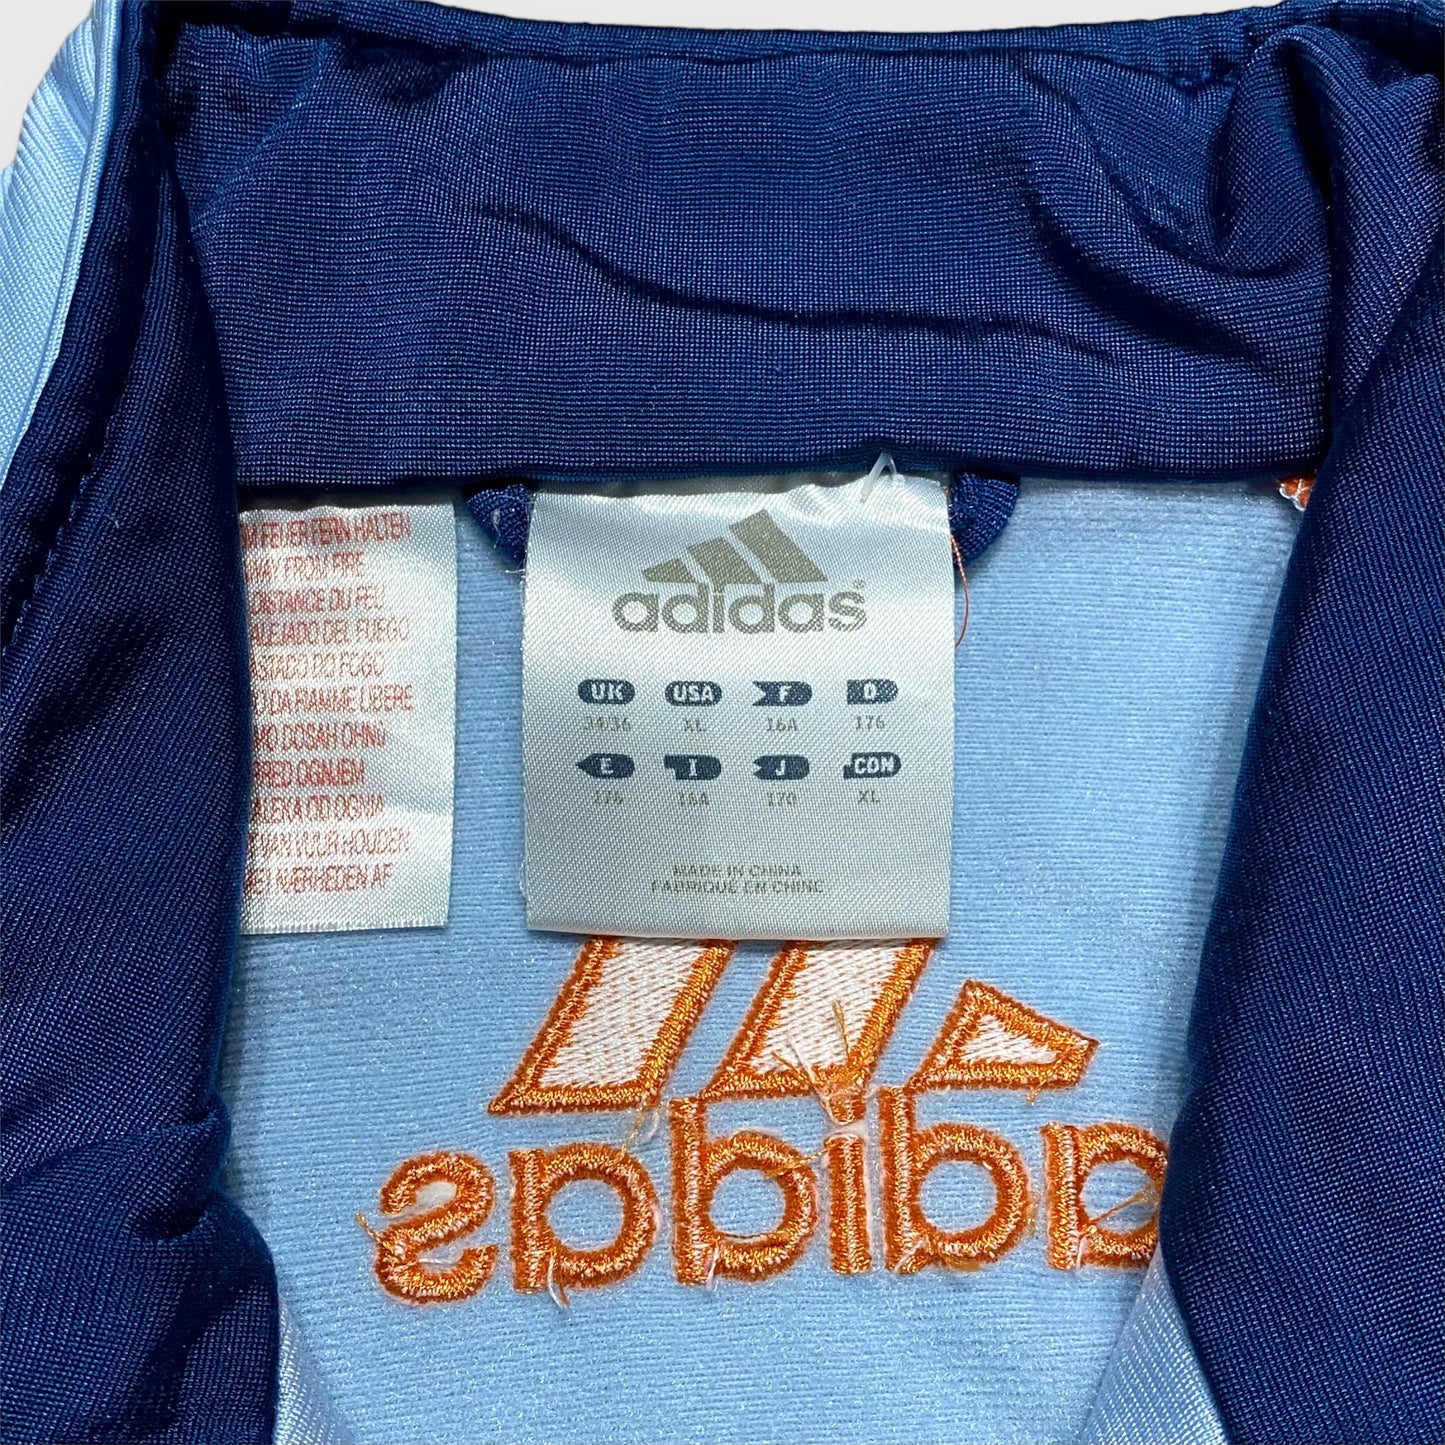 00's "adidas" Track jacket